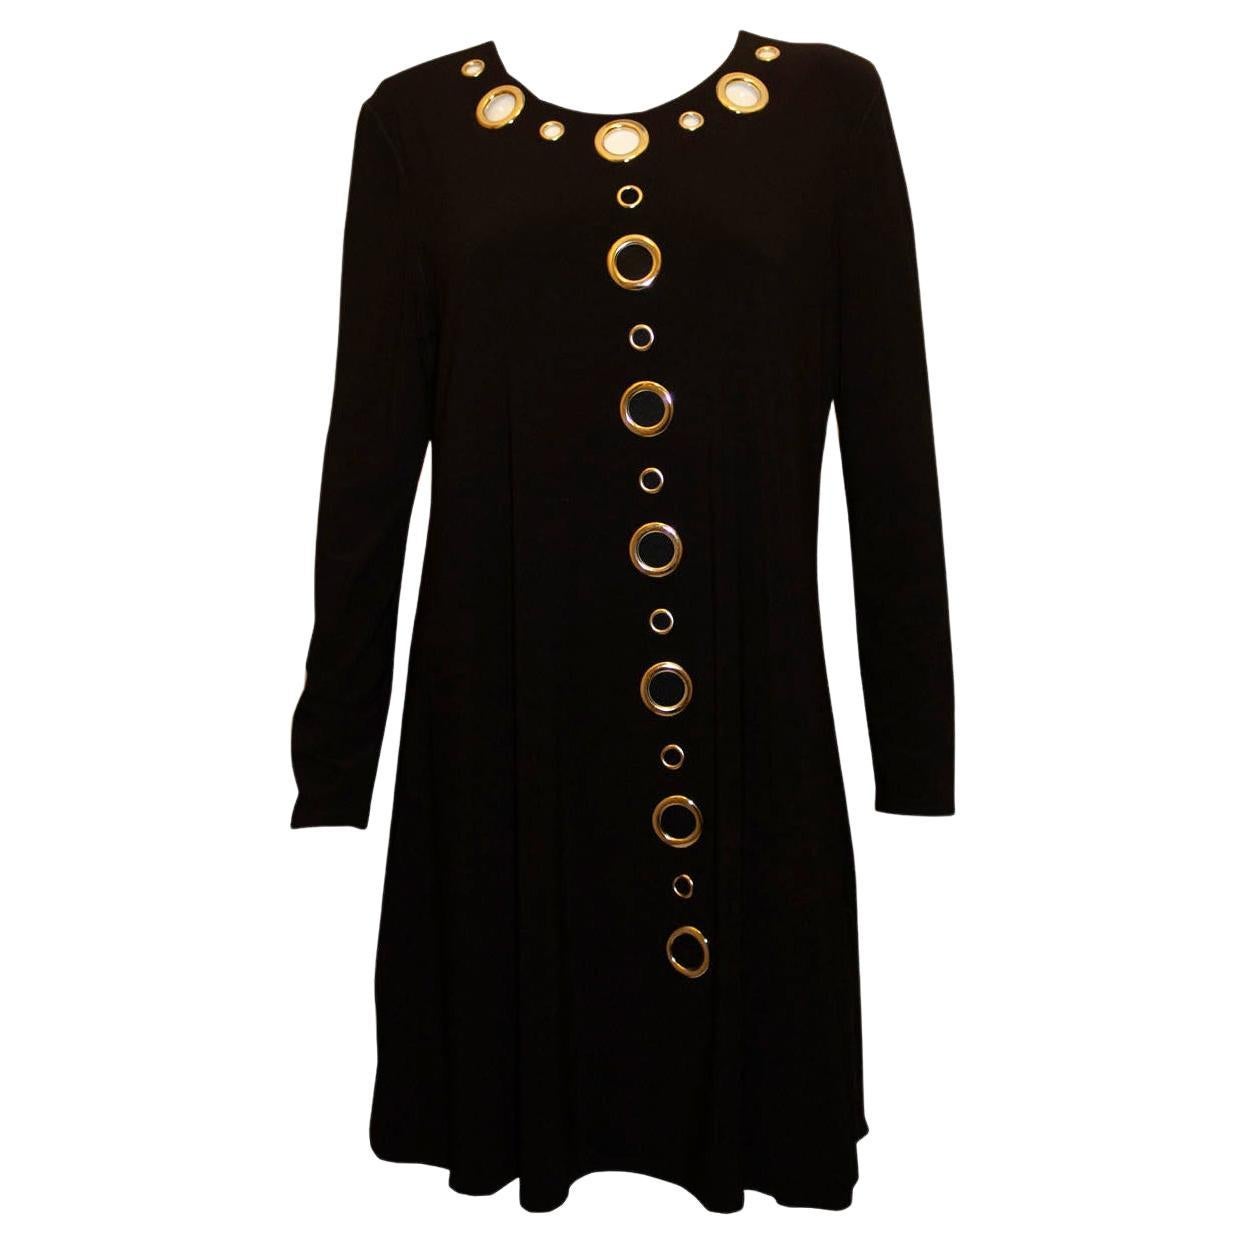 Vintage Black Jersey Dress with Decorative Holes For Sale